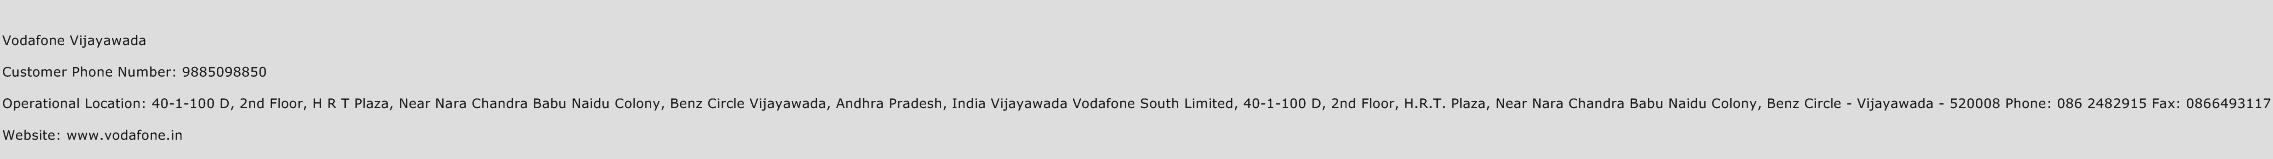 Vodafone Vijayawada Phone Number Customer Service